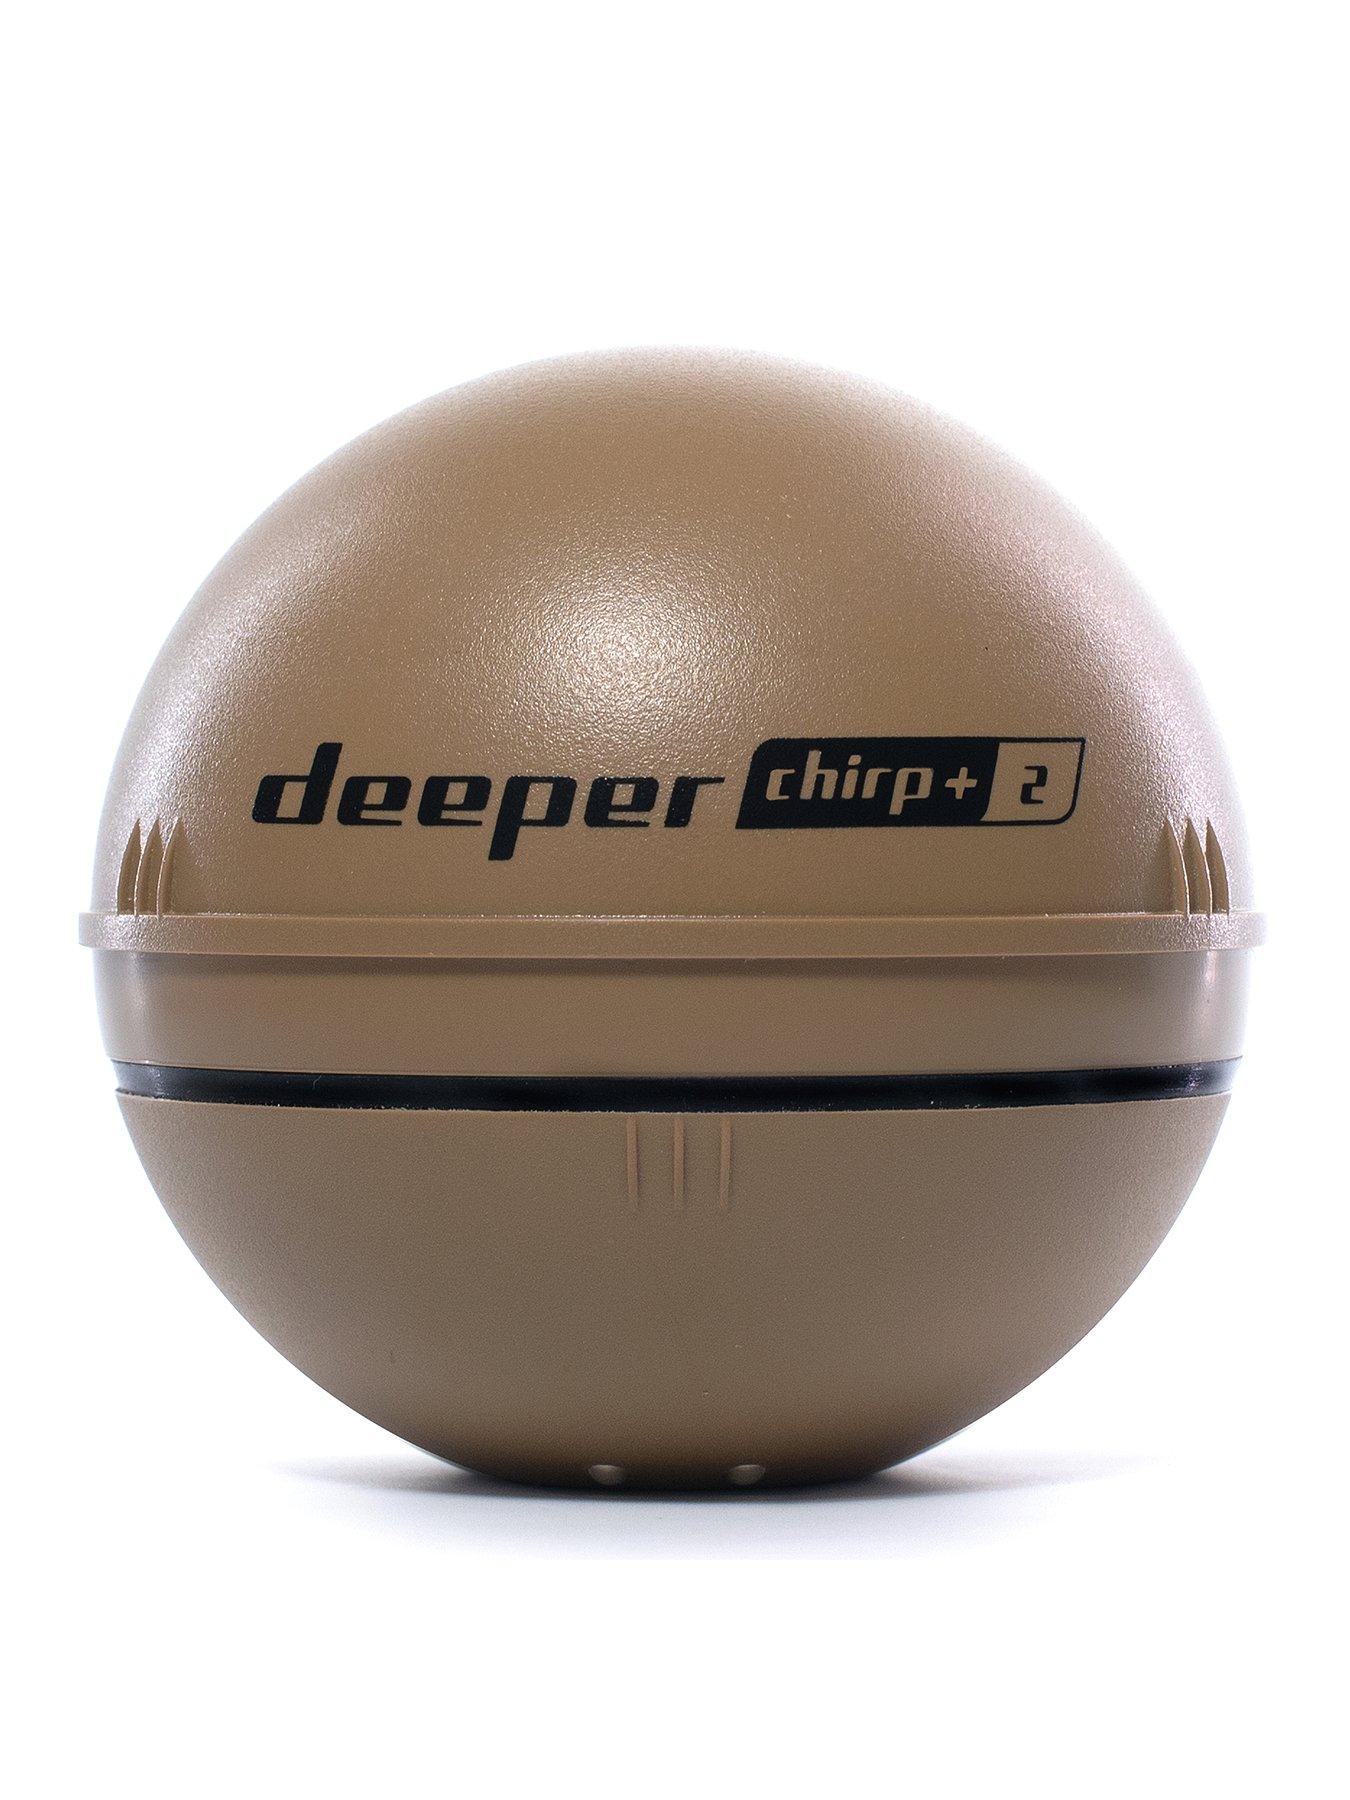 Deeper Deeper Chirp+ 2 Wireless Smart Sonar Castable and Portable